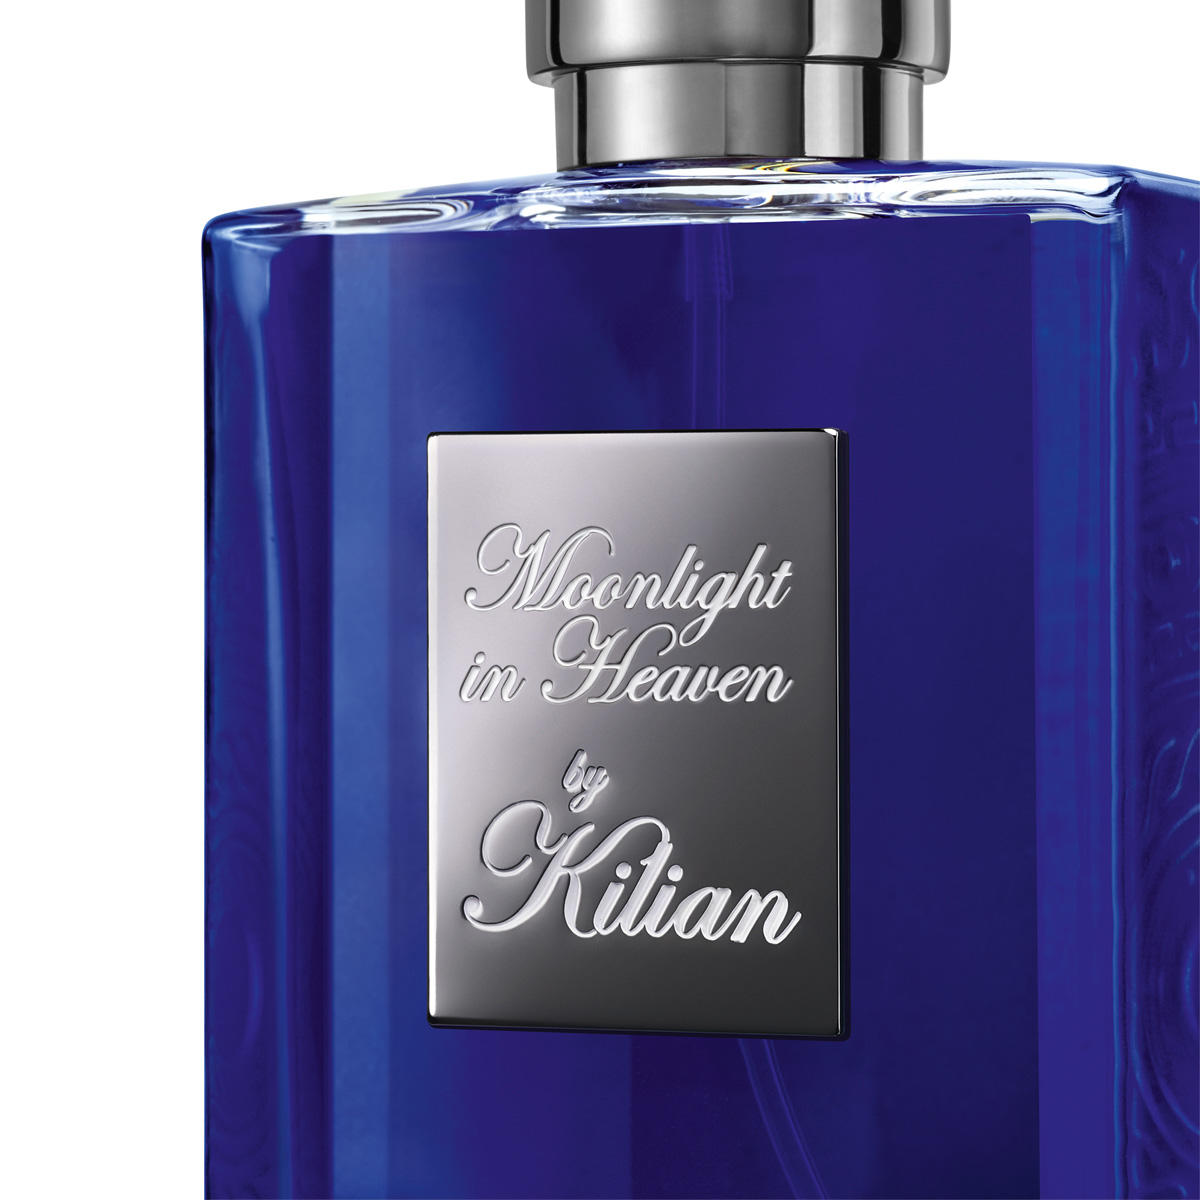 Kilian Paris Fragrance Moonlight in Heaven Eau de Parfum nachfüllbar 50 ml - 2